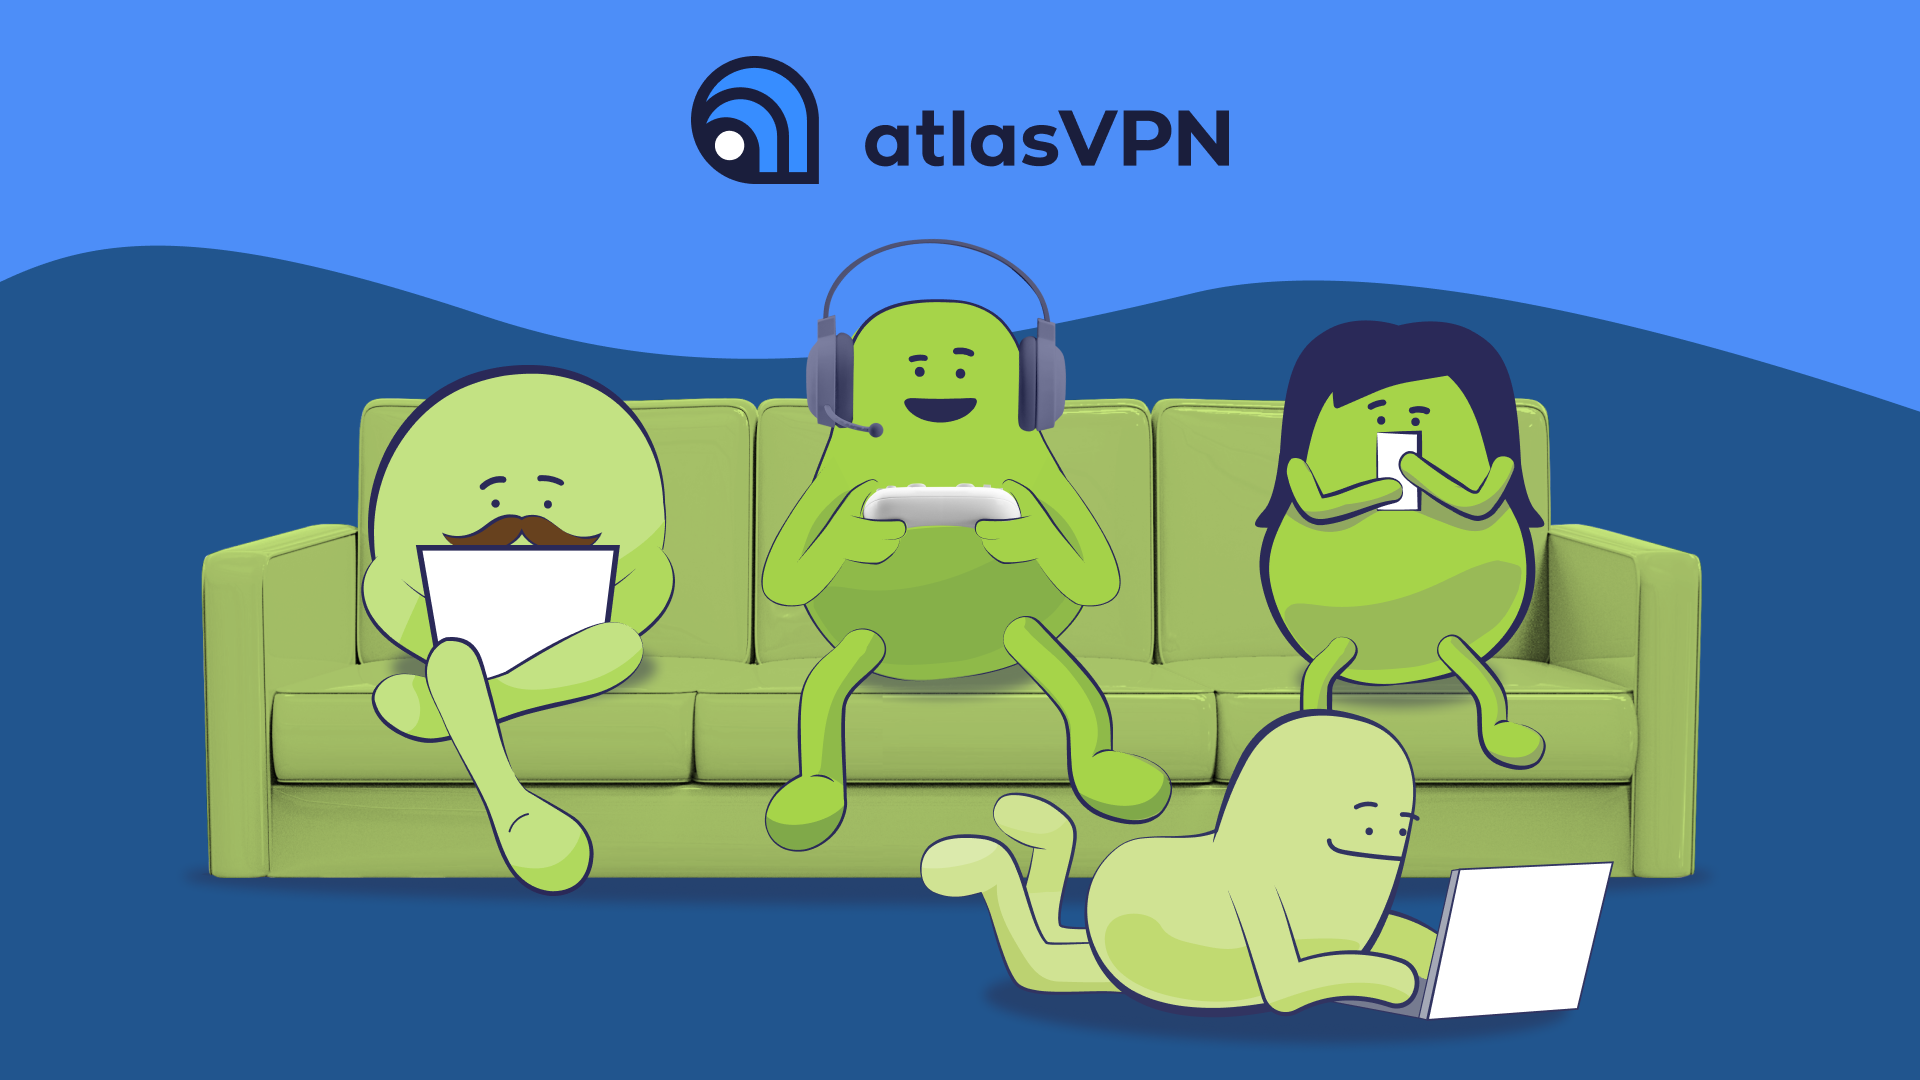 [$ 66.64] Atlas VPN - 3 Years Subscription Activation Key